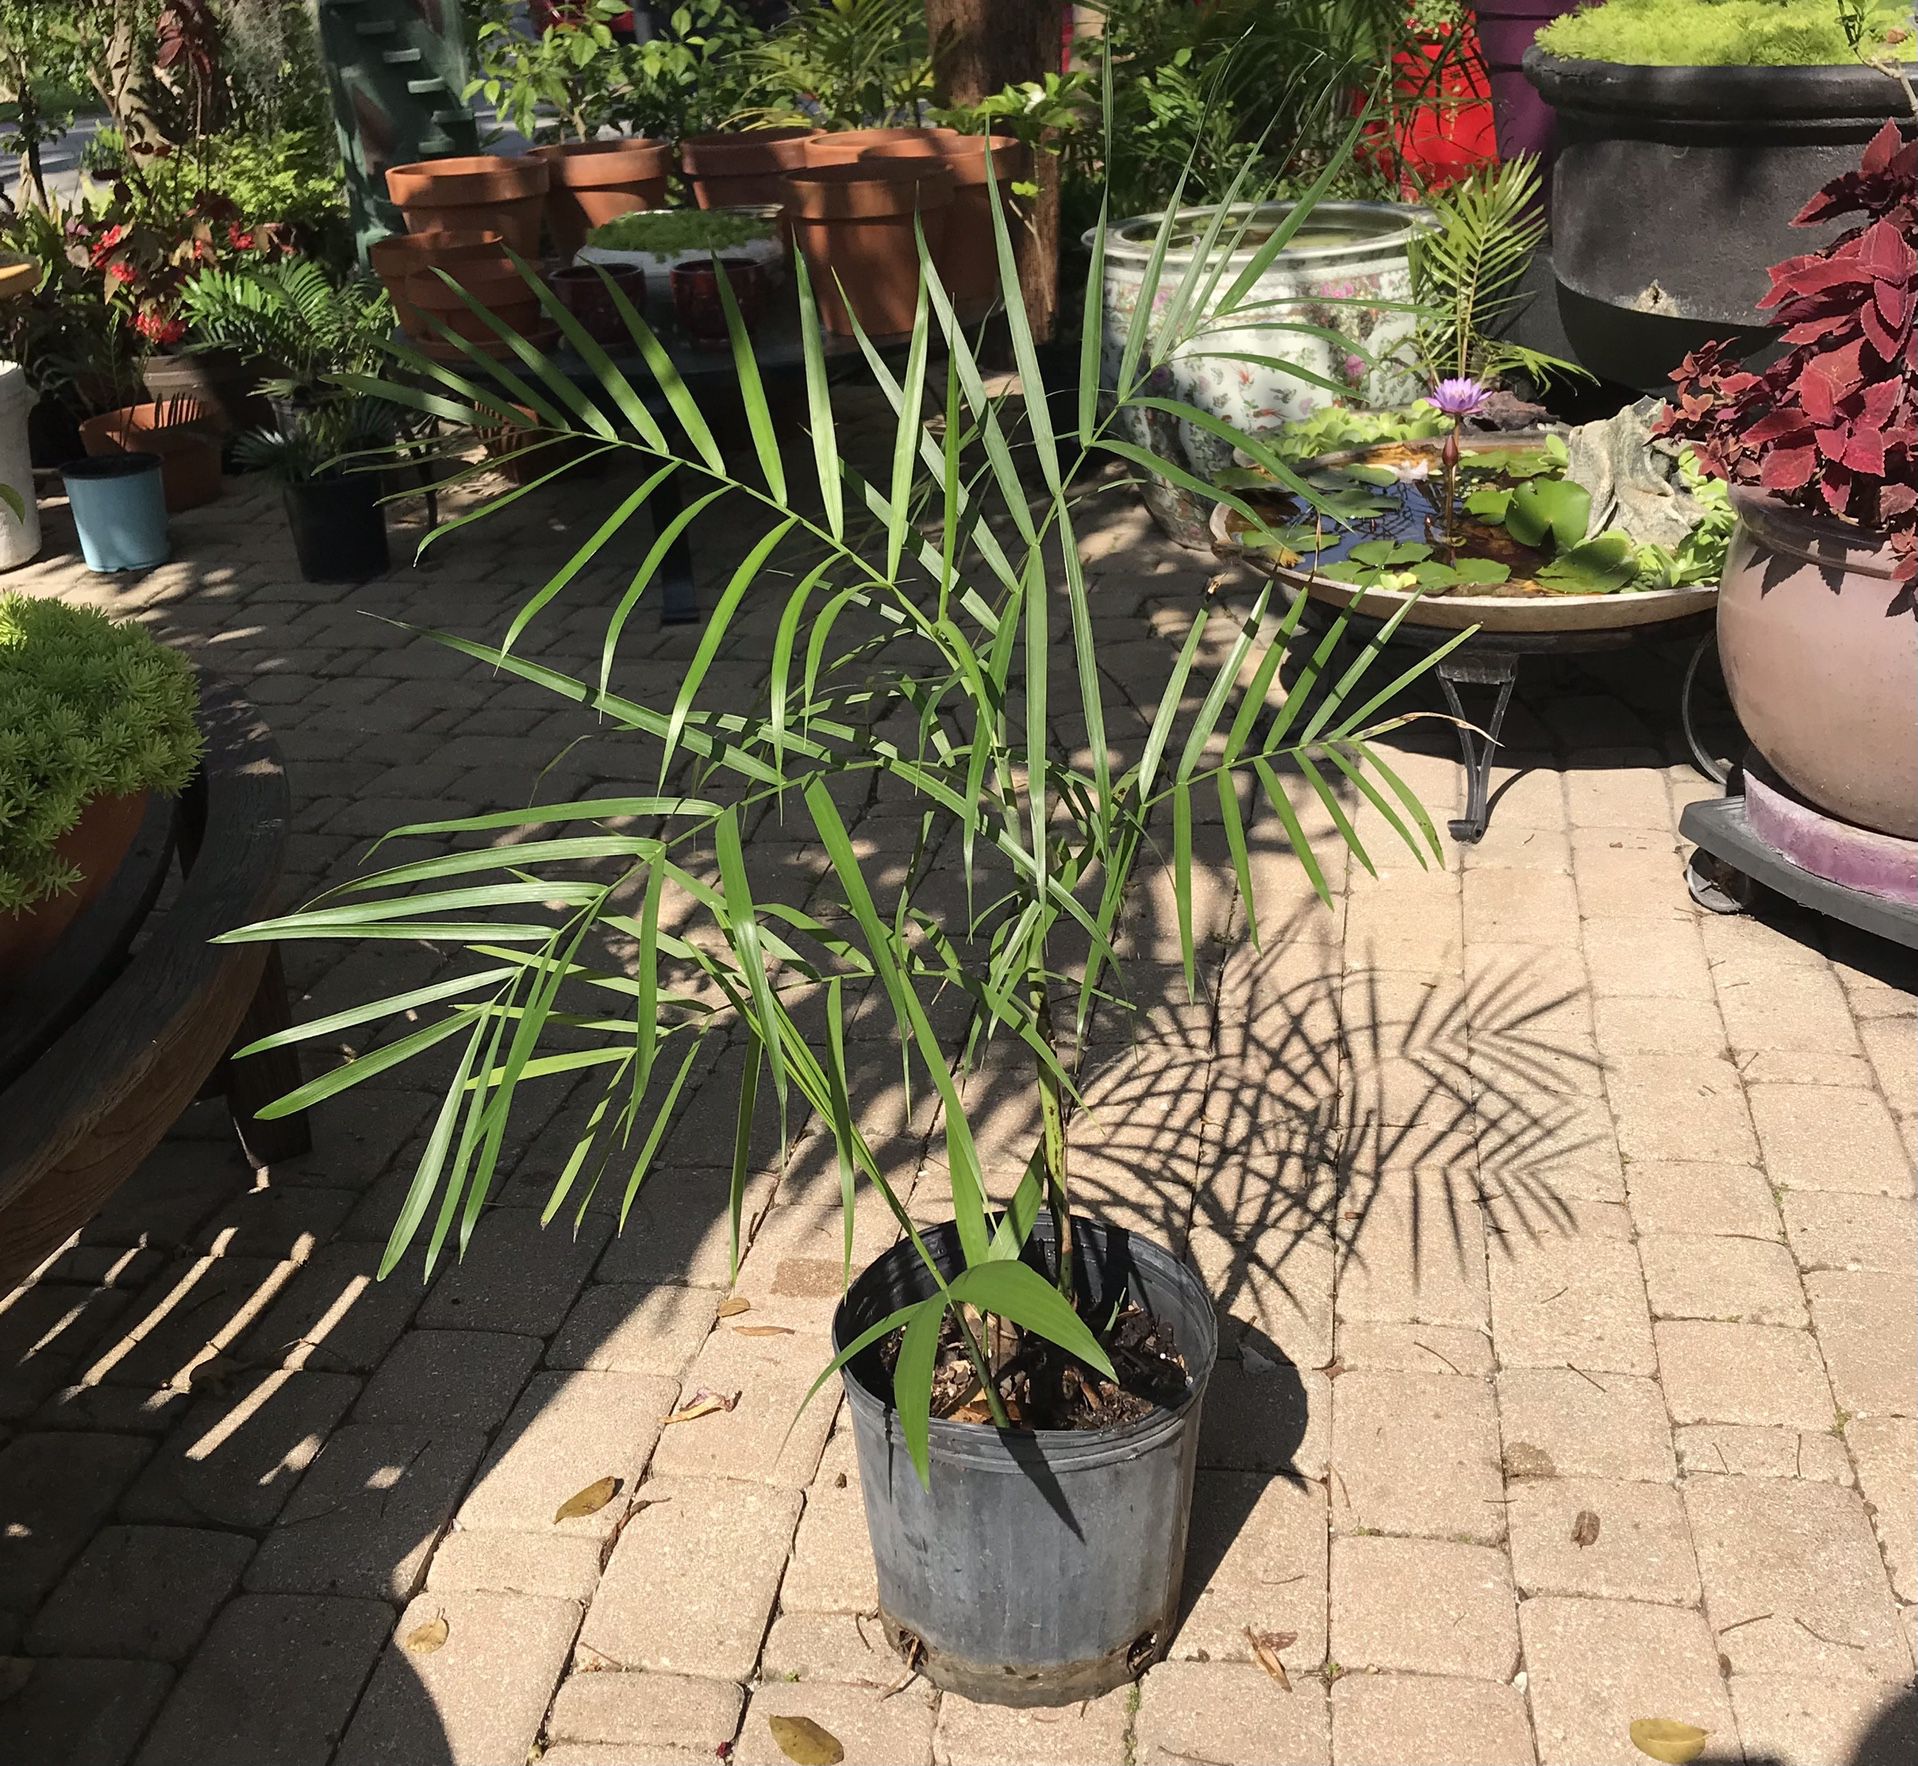 2-3’  Tall Bamboo Palms-$10 Each